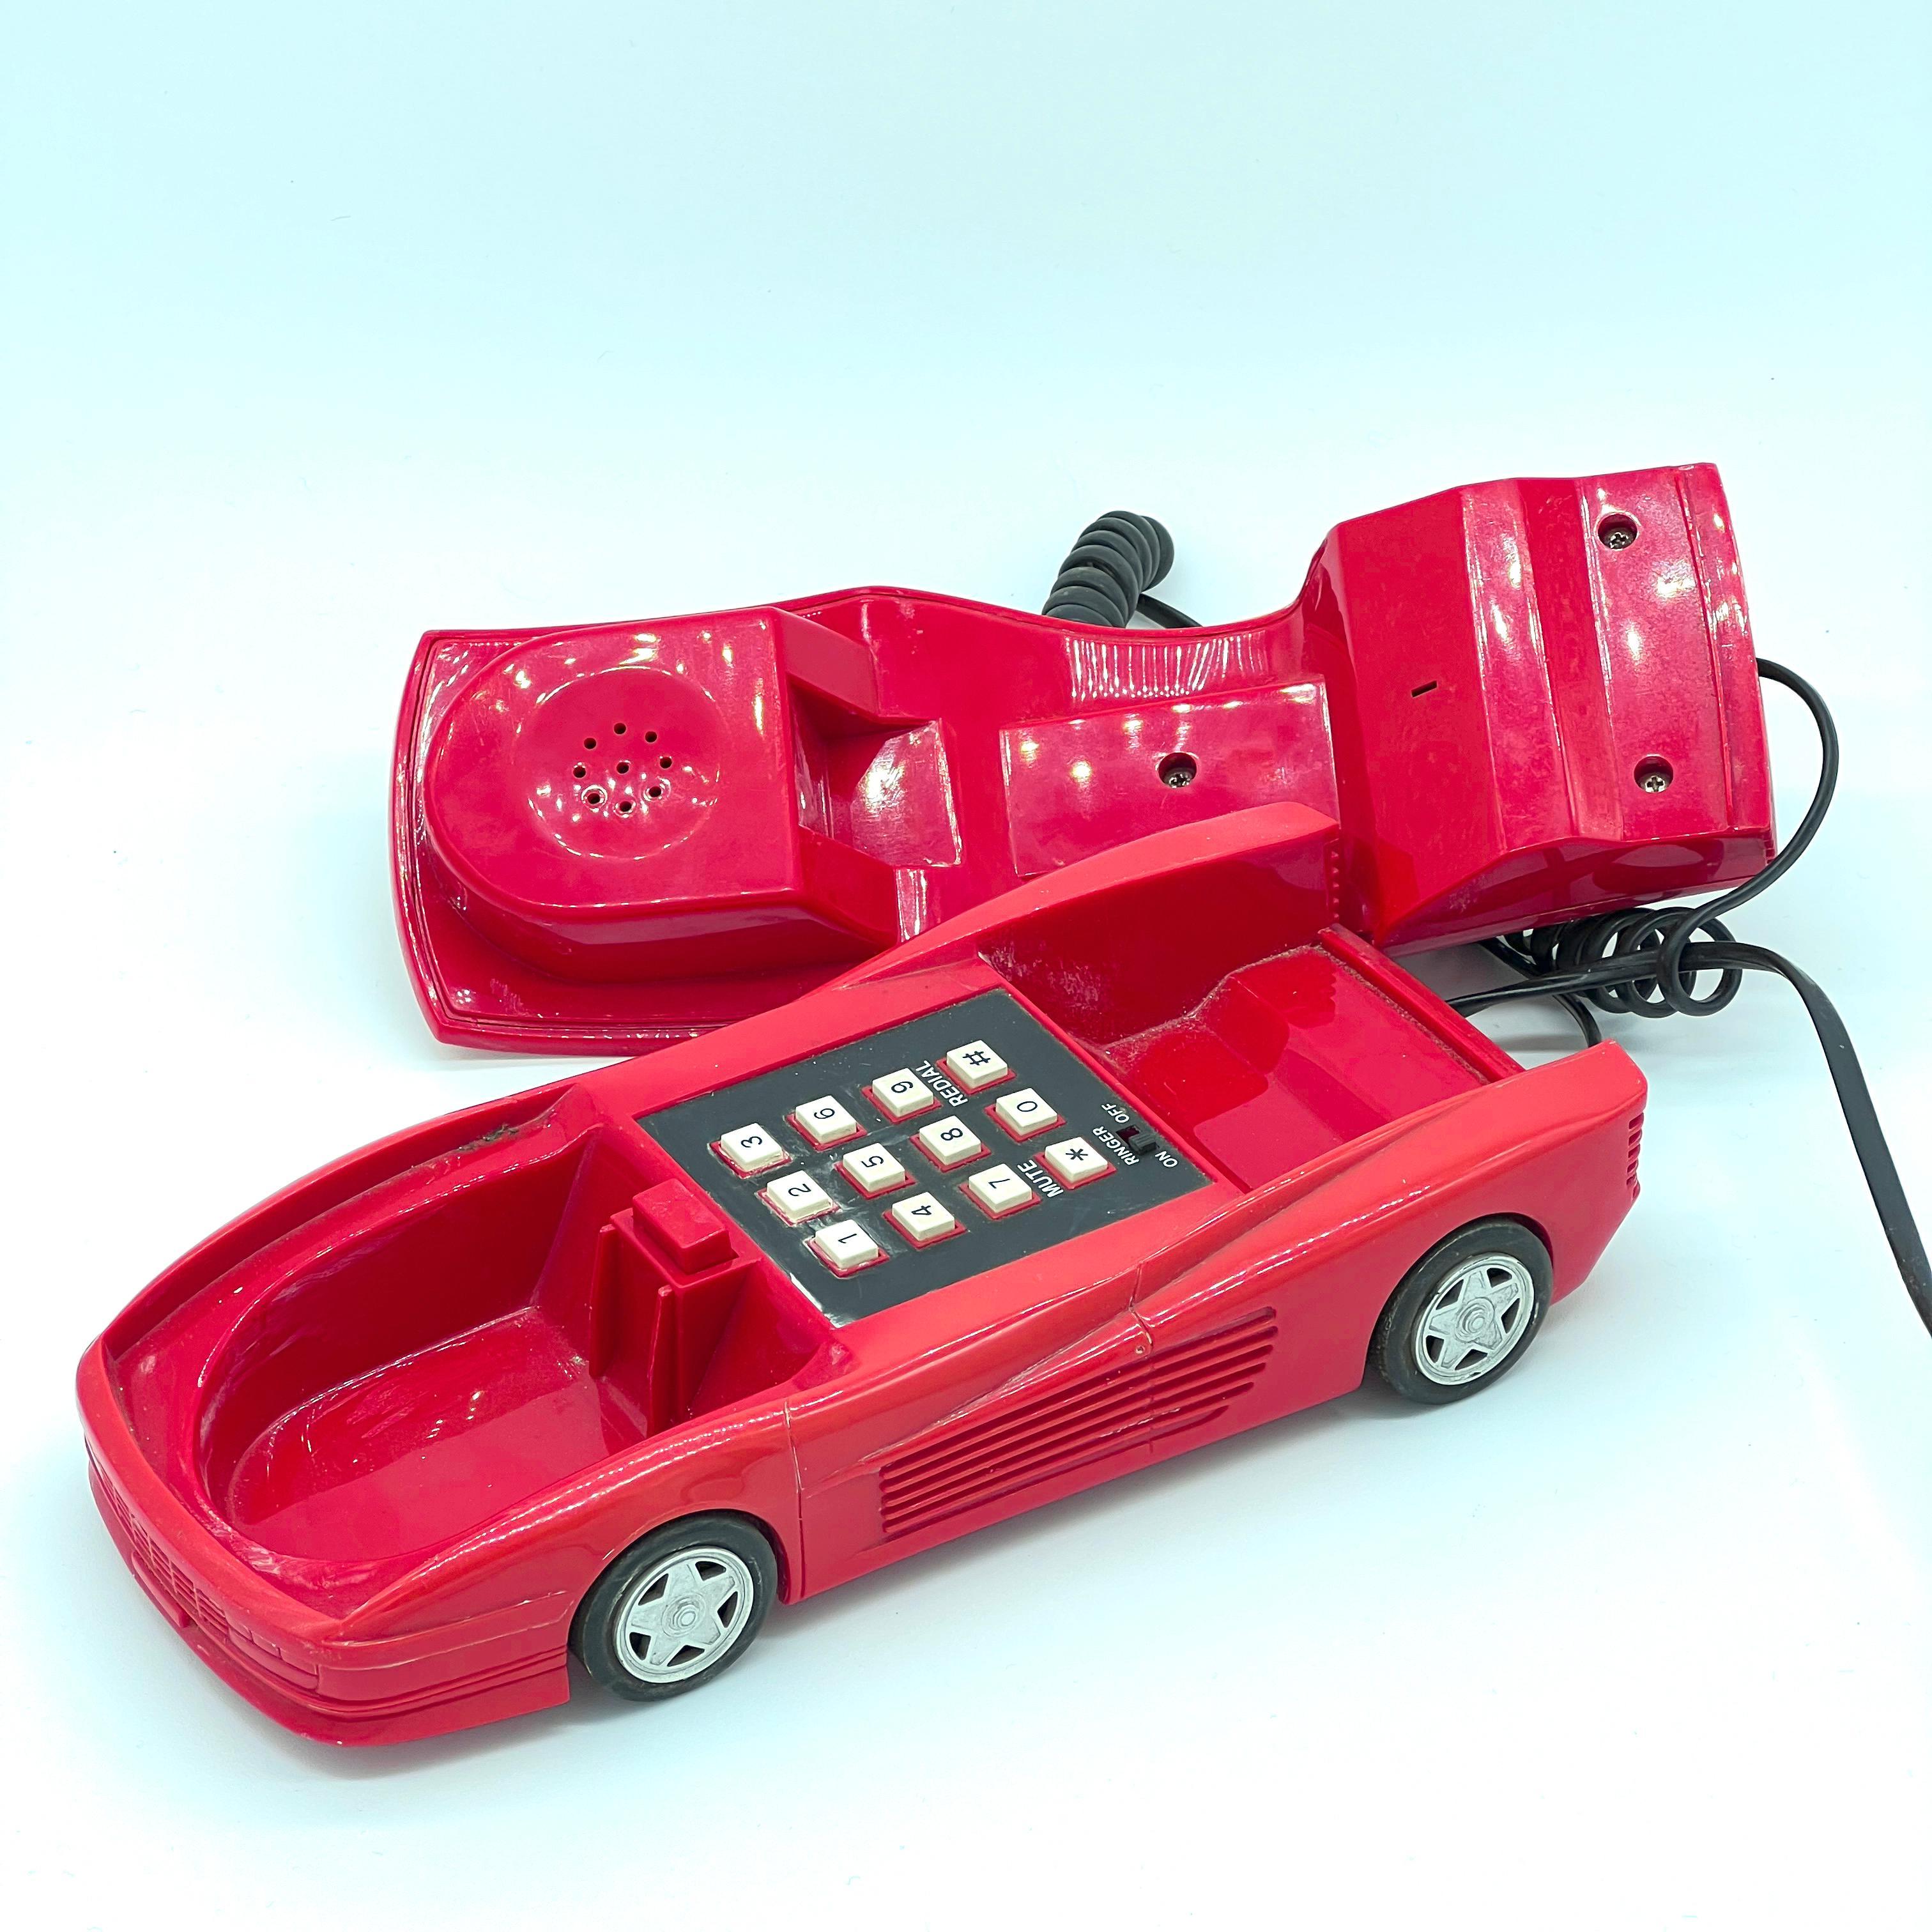 Ferrari- Telefon, 80er Jahre Miami Vice Era Telefon, Vintage-Telefon, Sammlerstück (Moderne) im Angebot